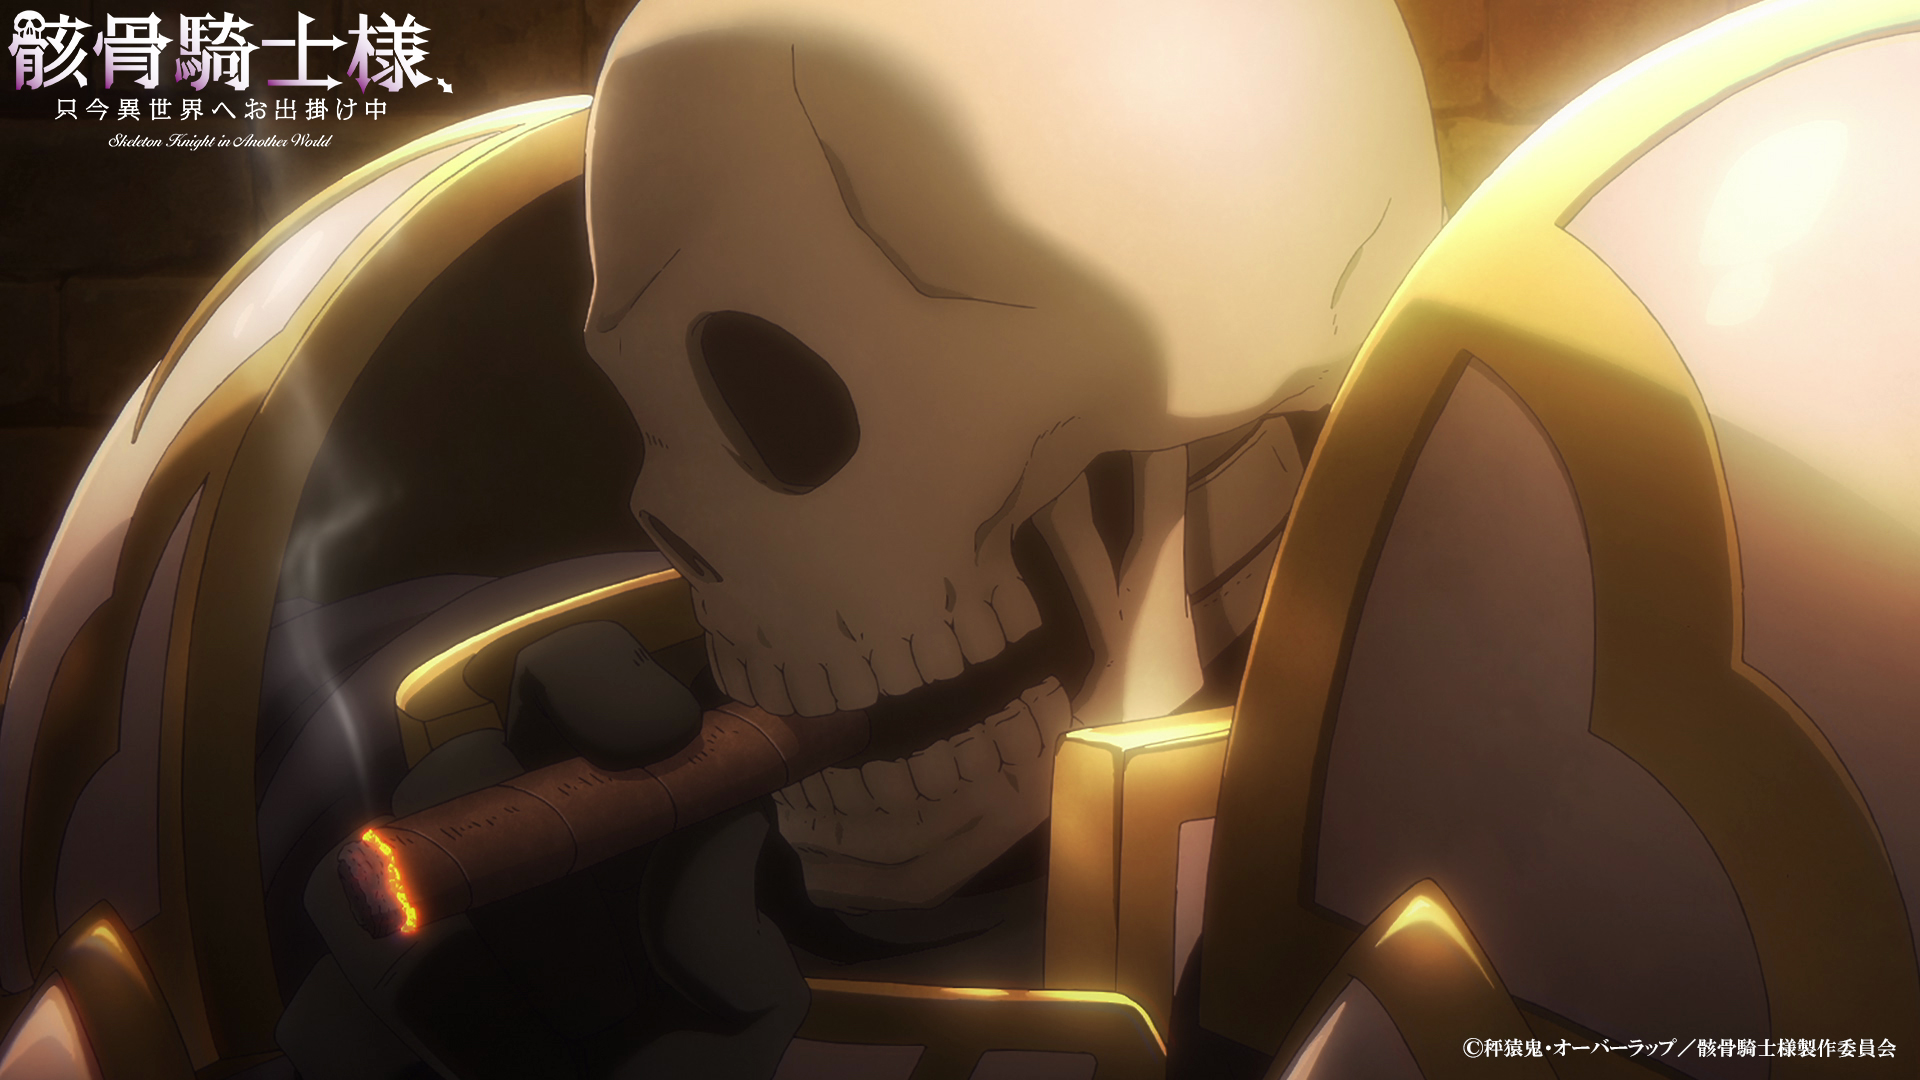 Arc Skeleton Knight in Another World Armor Cosplay Pepakura - Etsy